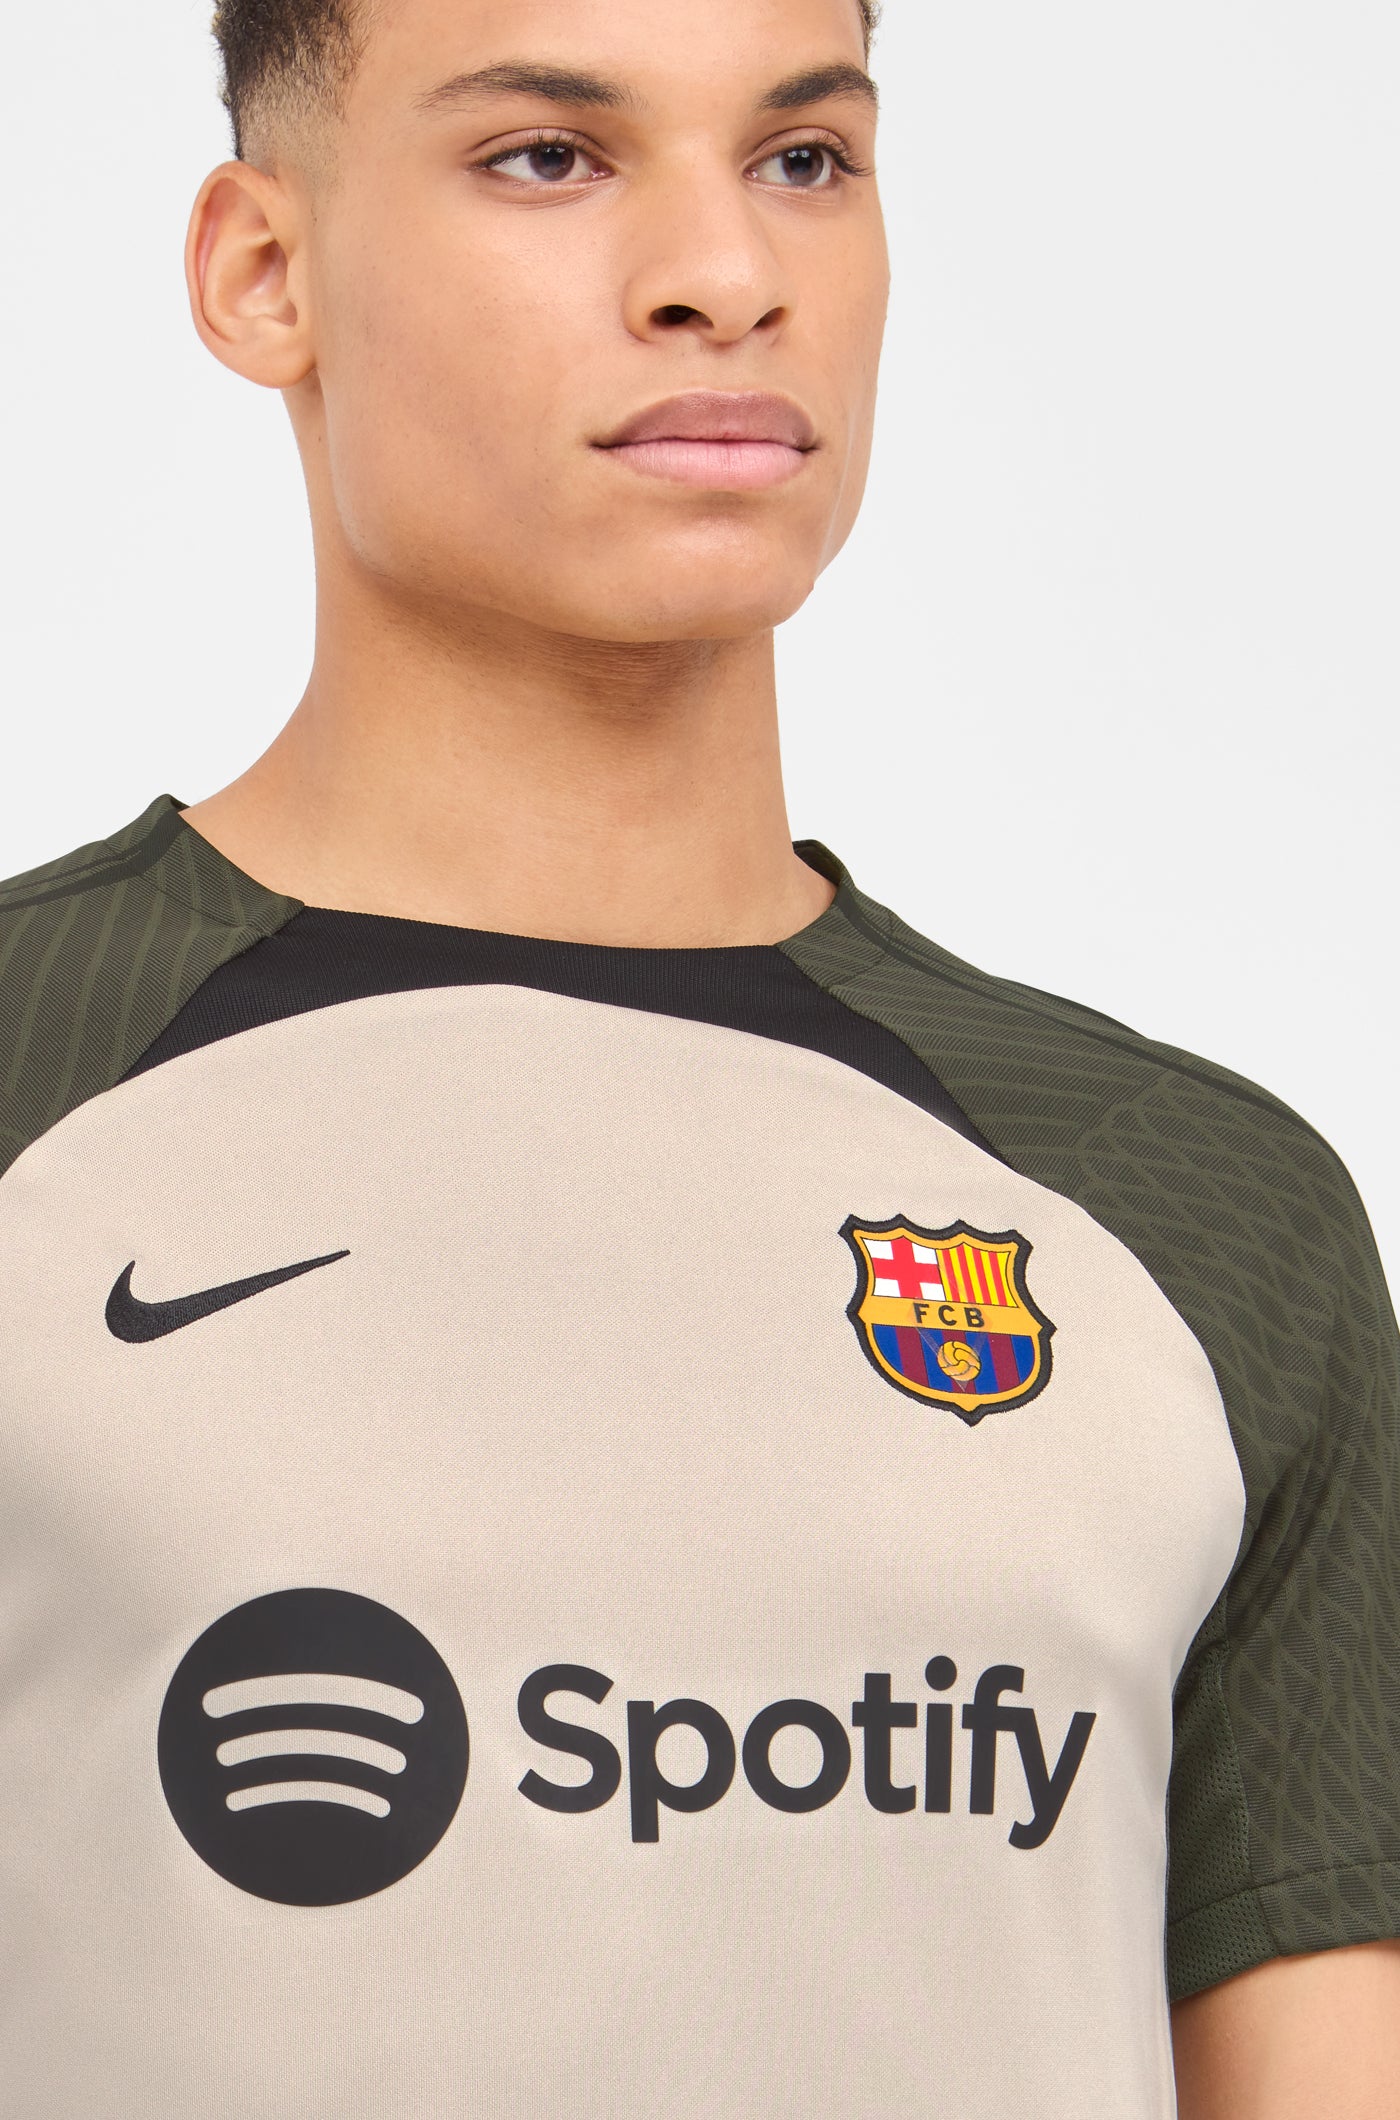 Training Shirt FC Barcelona 23/24 – Barça Official Spotify Camp Nou